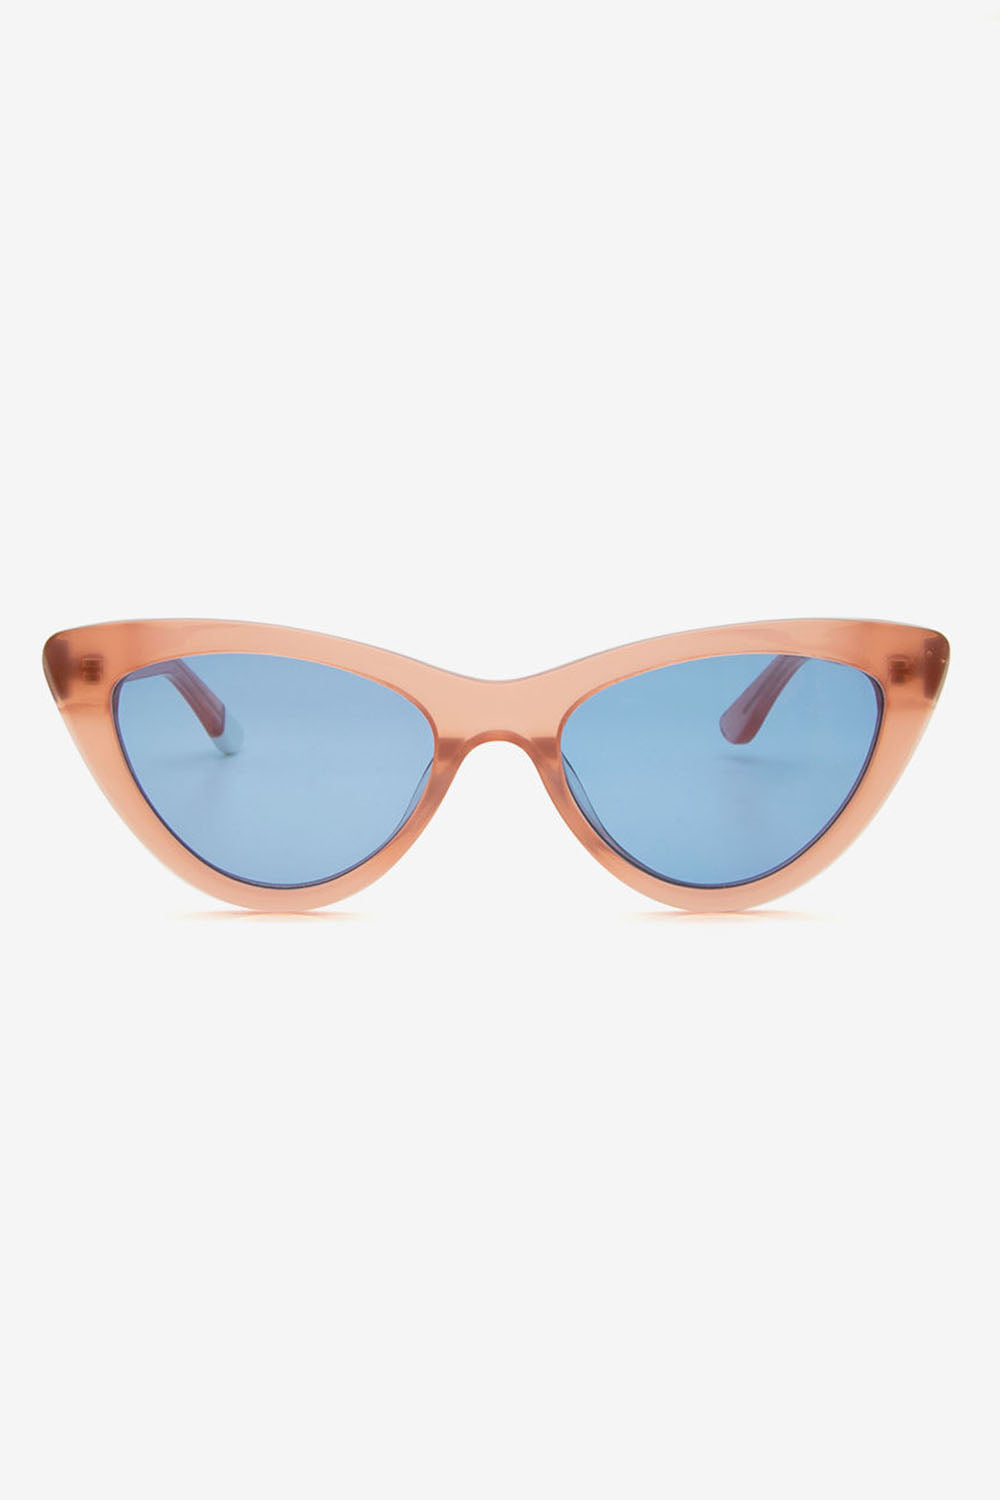 Meria Sunglasses Coral Pink